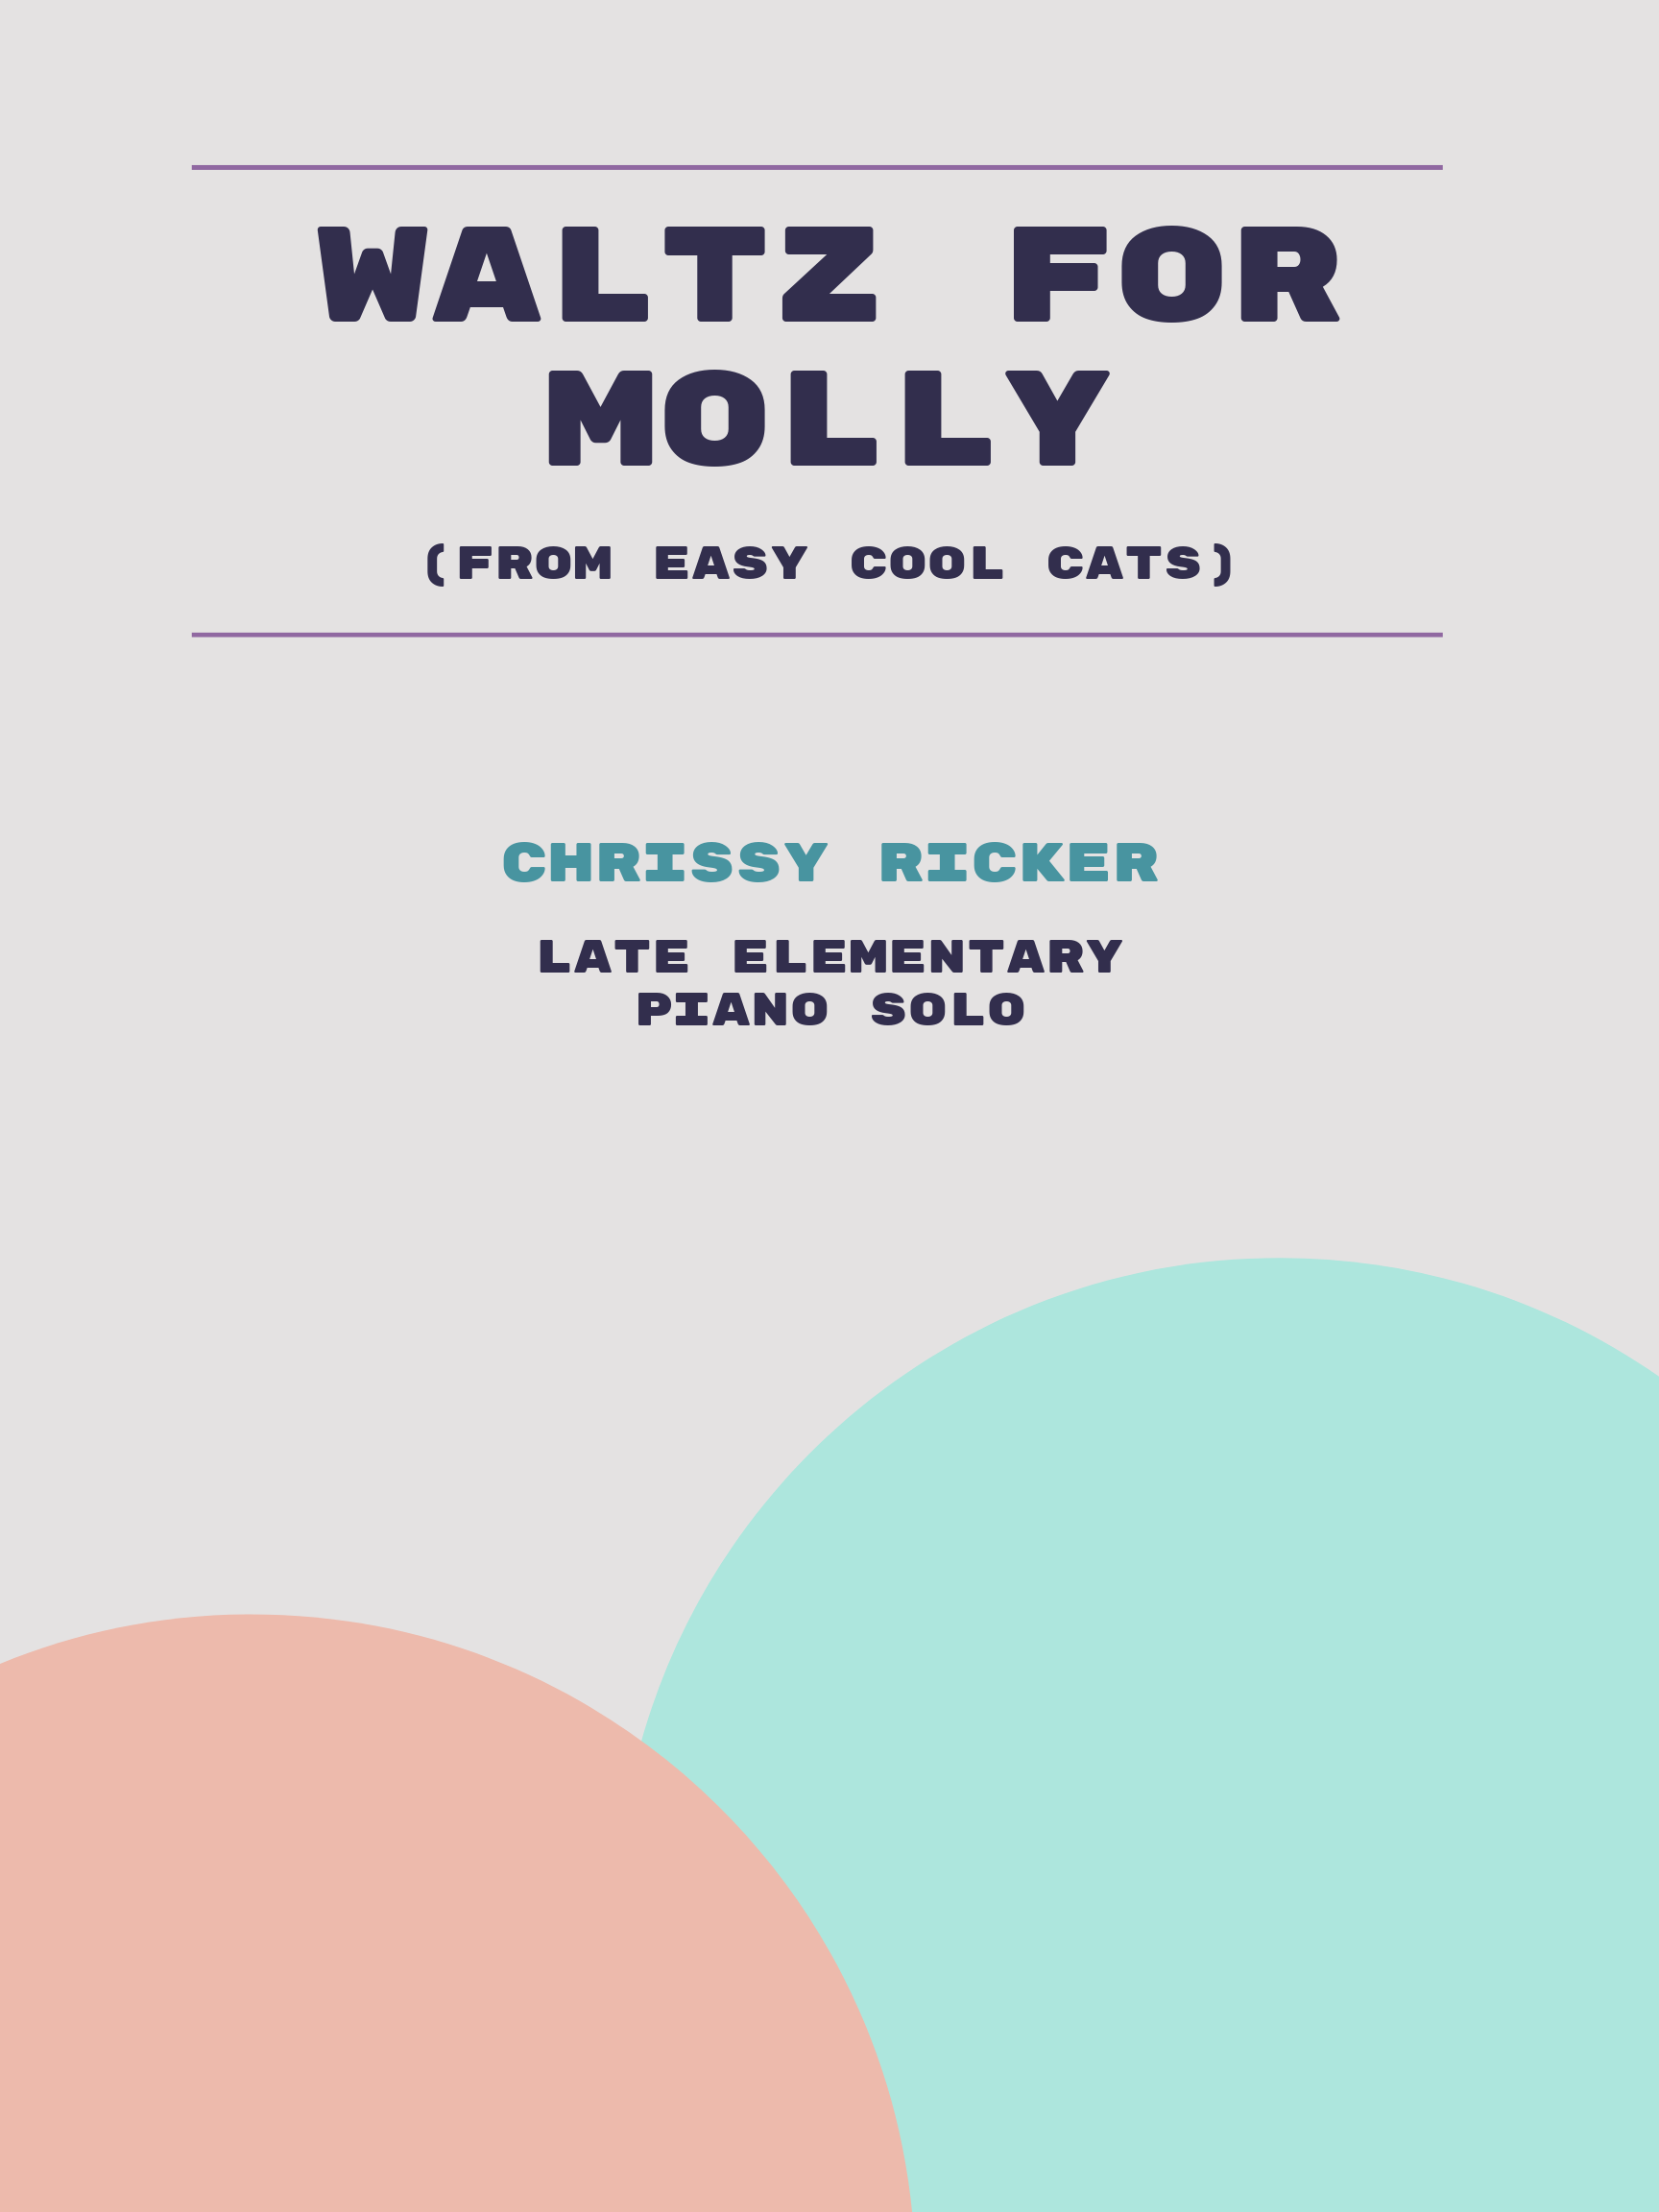 Waltz for Molly by Chrissy Ricker